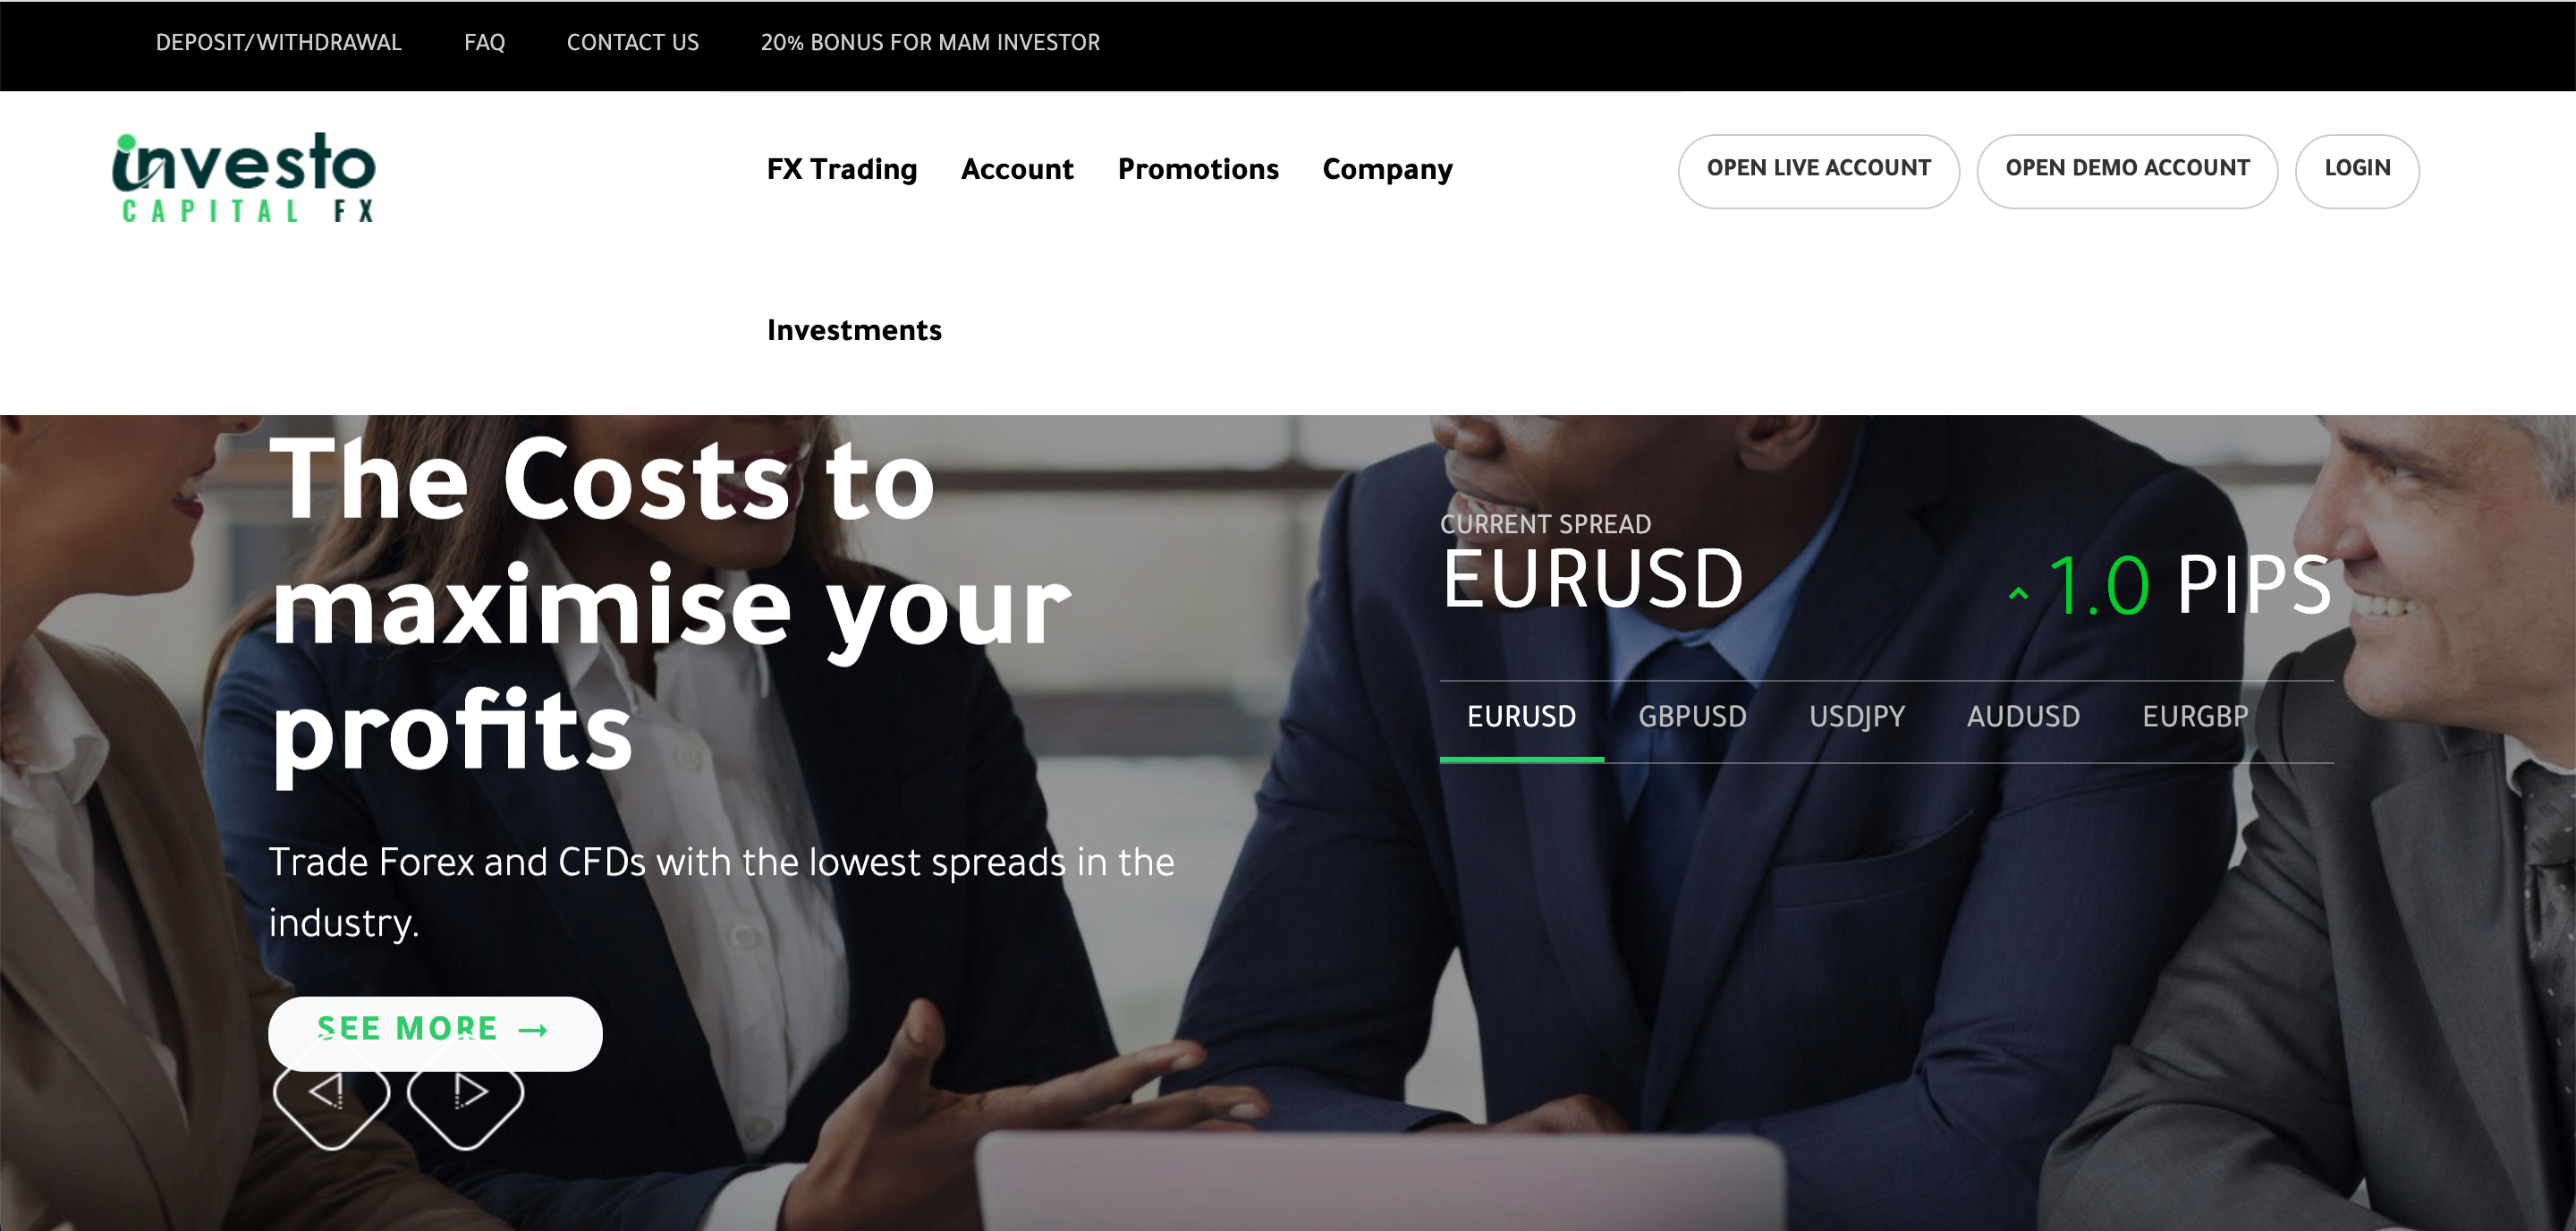 Investo Capital FX website